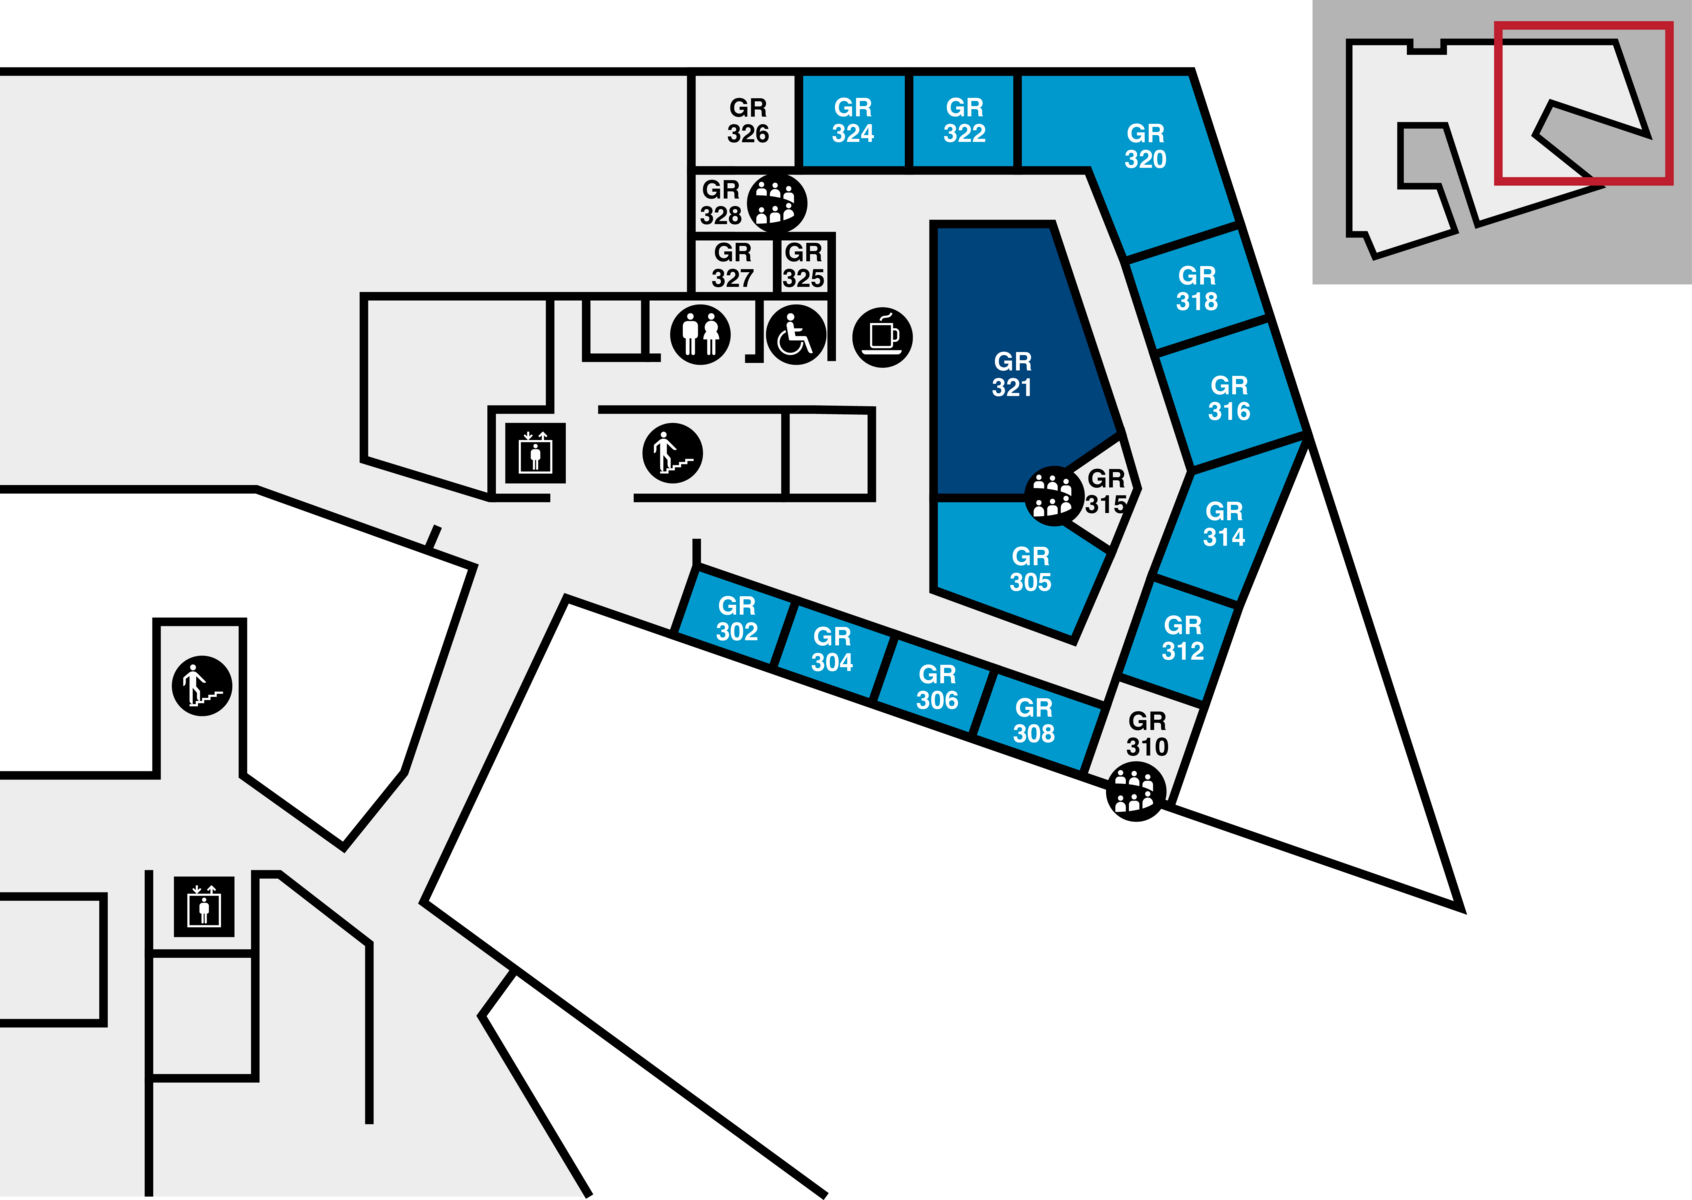 Floor plan of the Comuter Science department